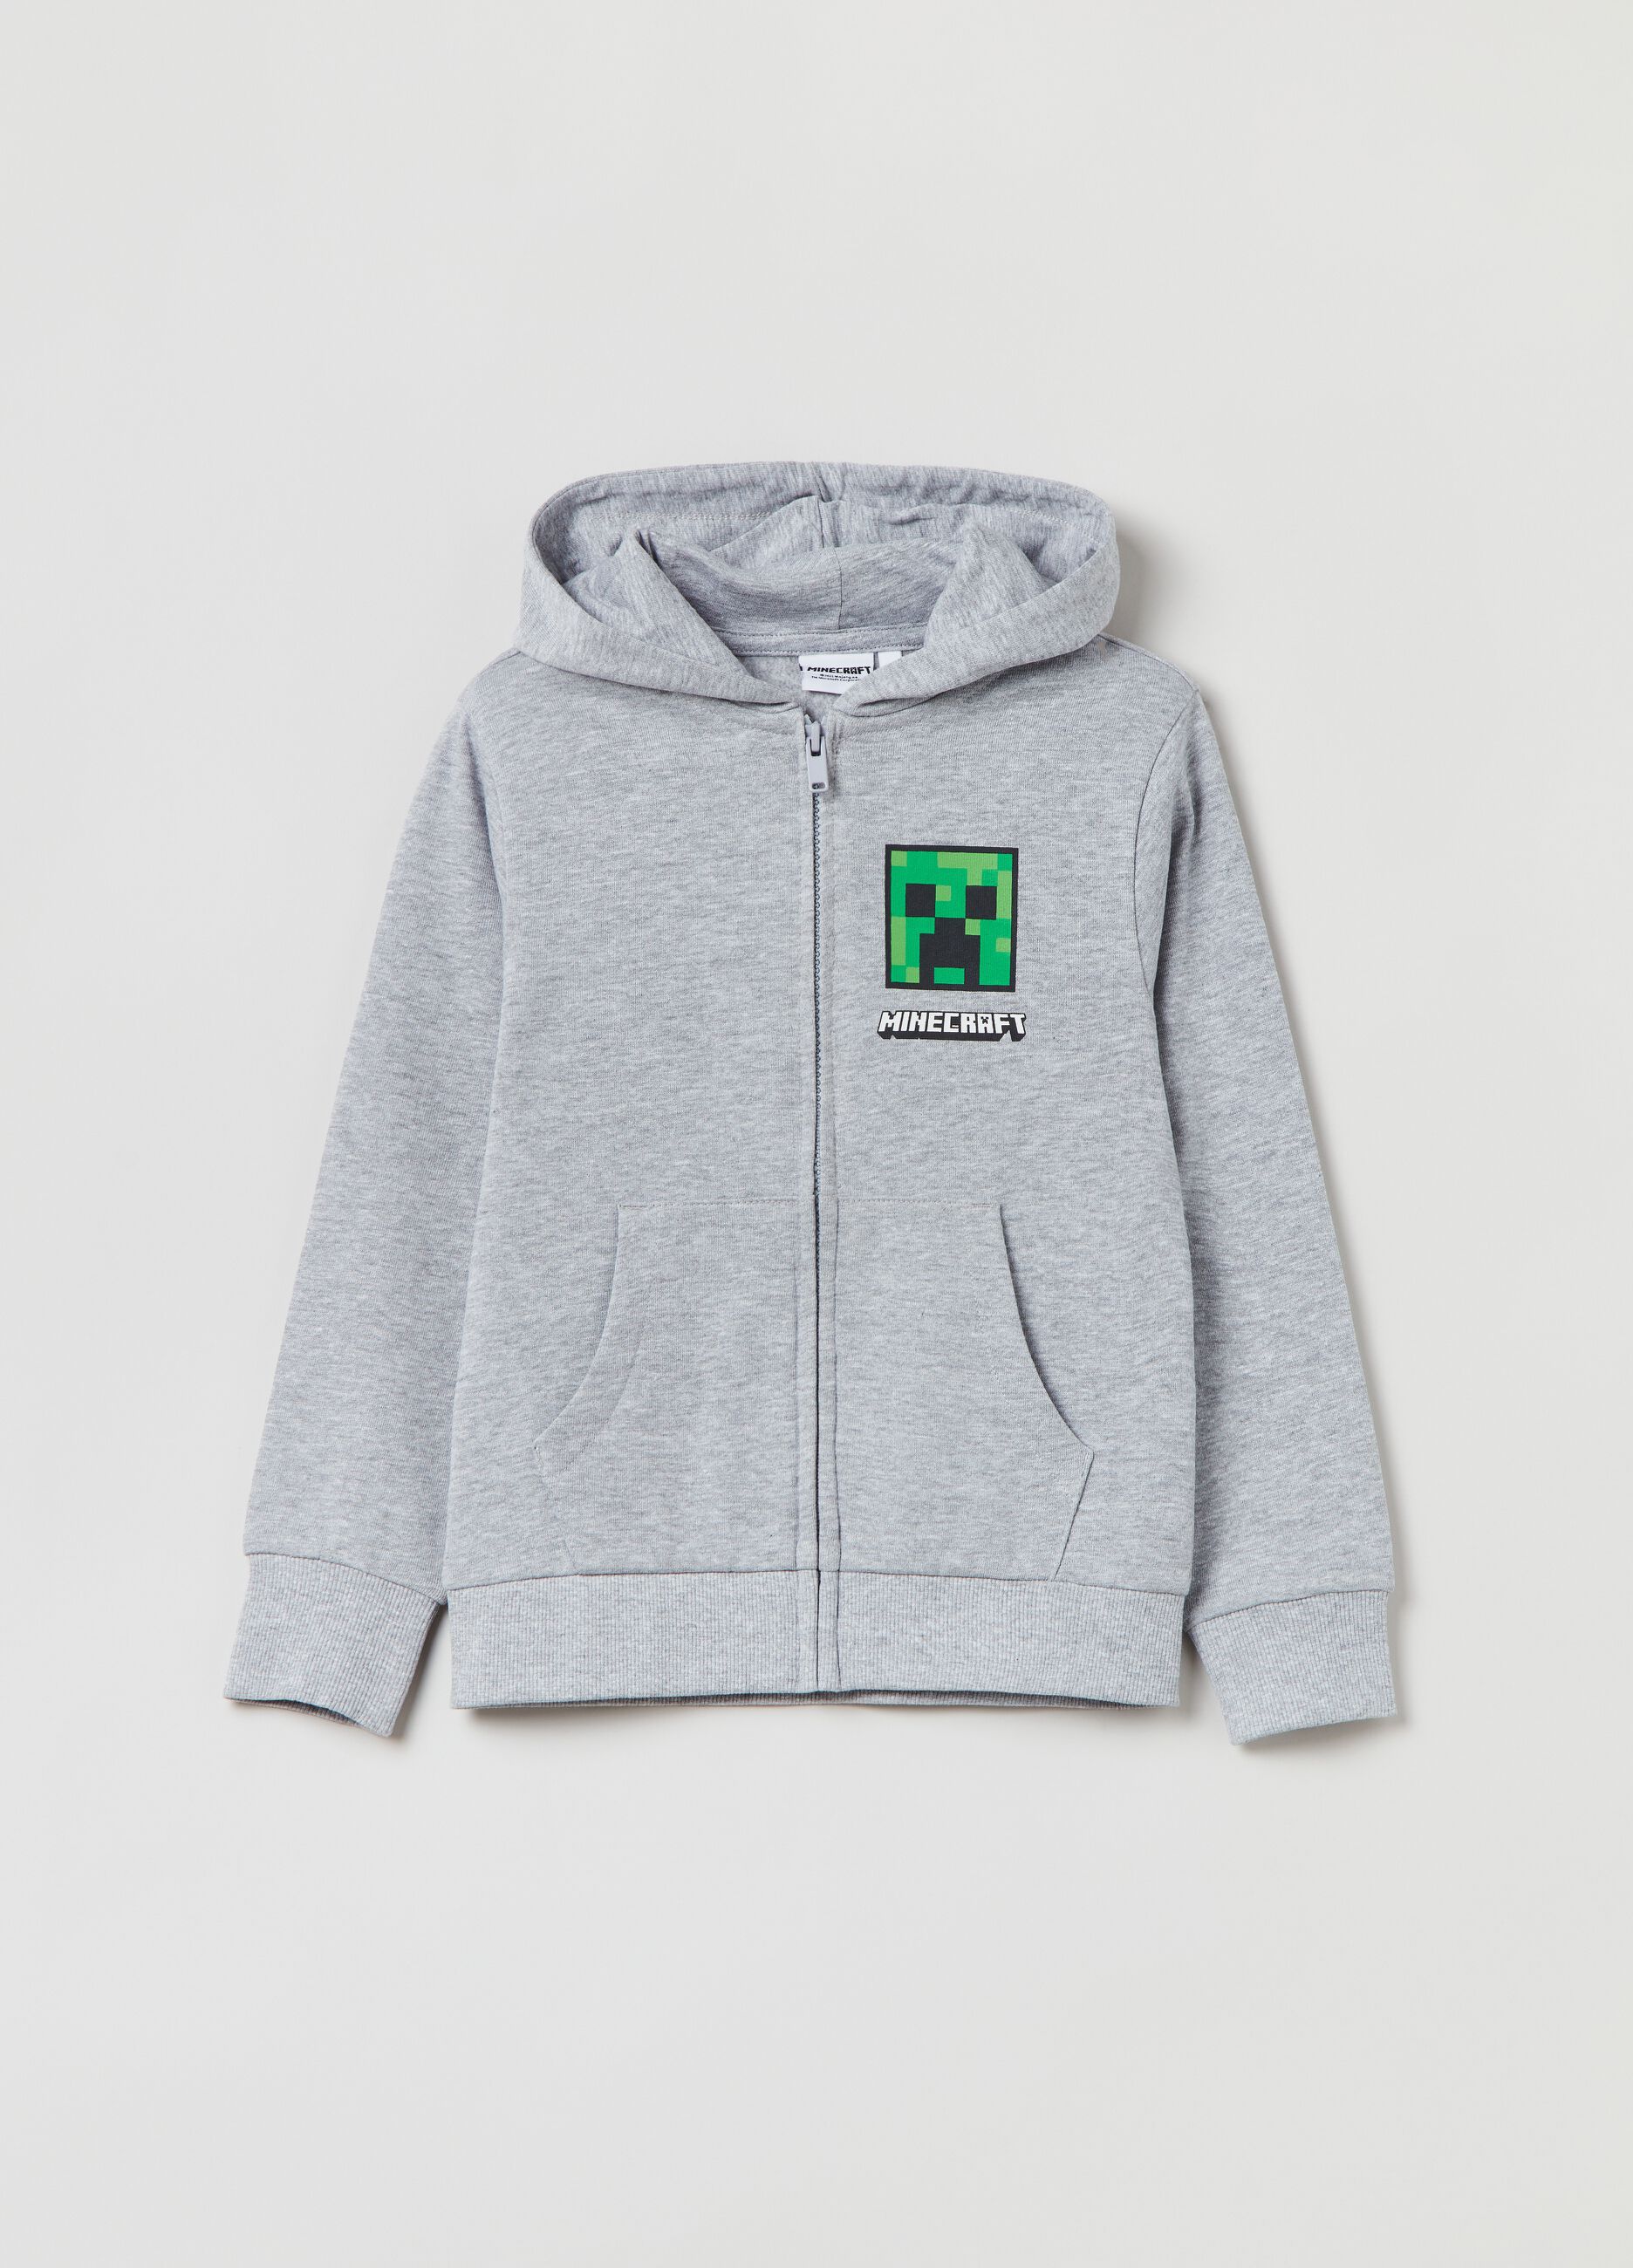 minecraft zip up hoodie